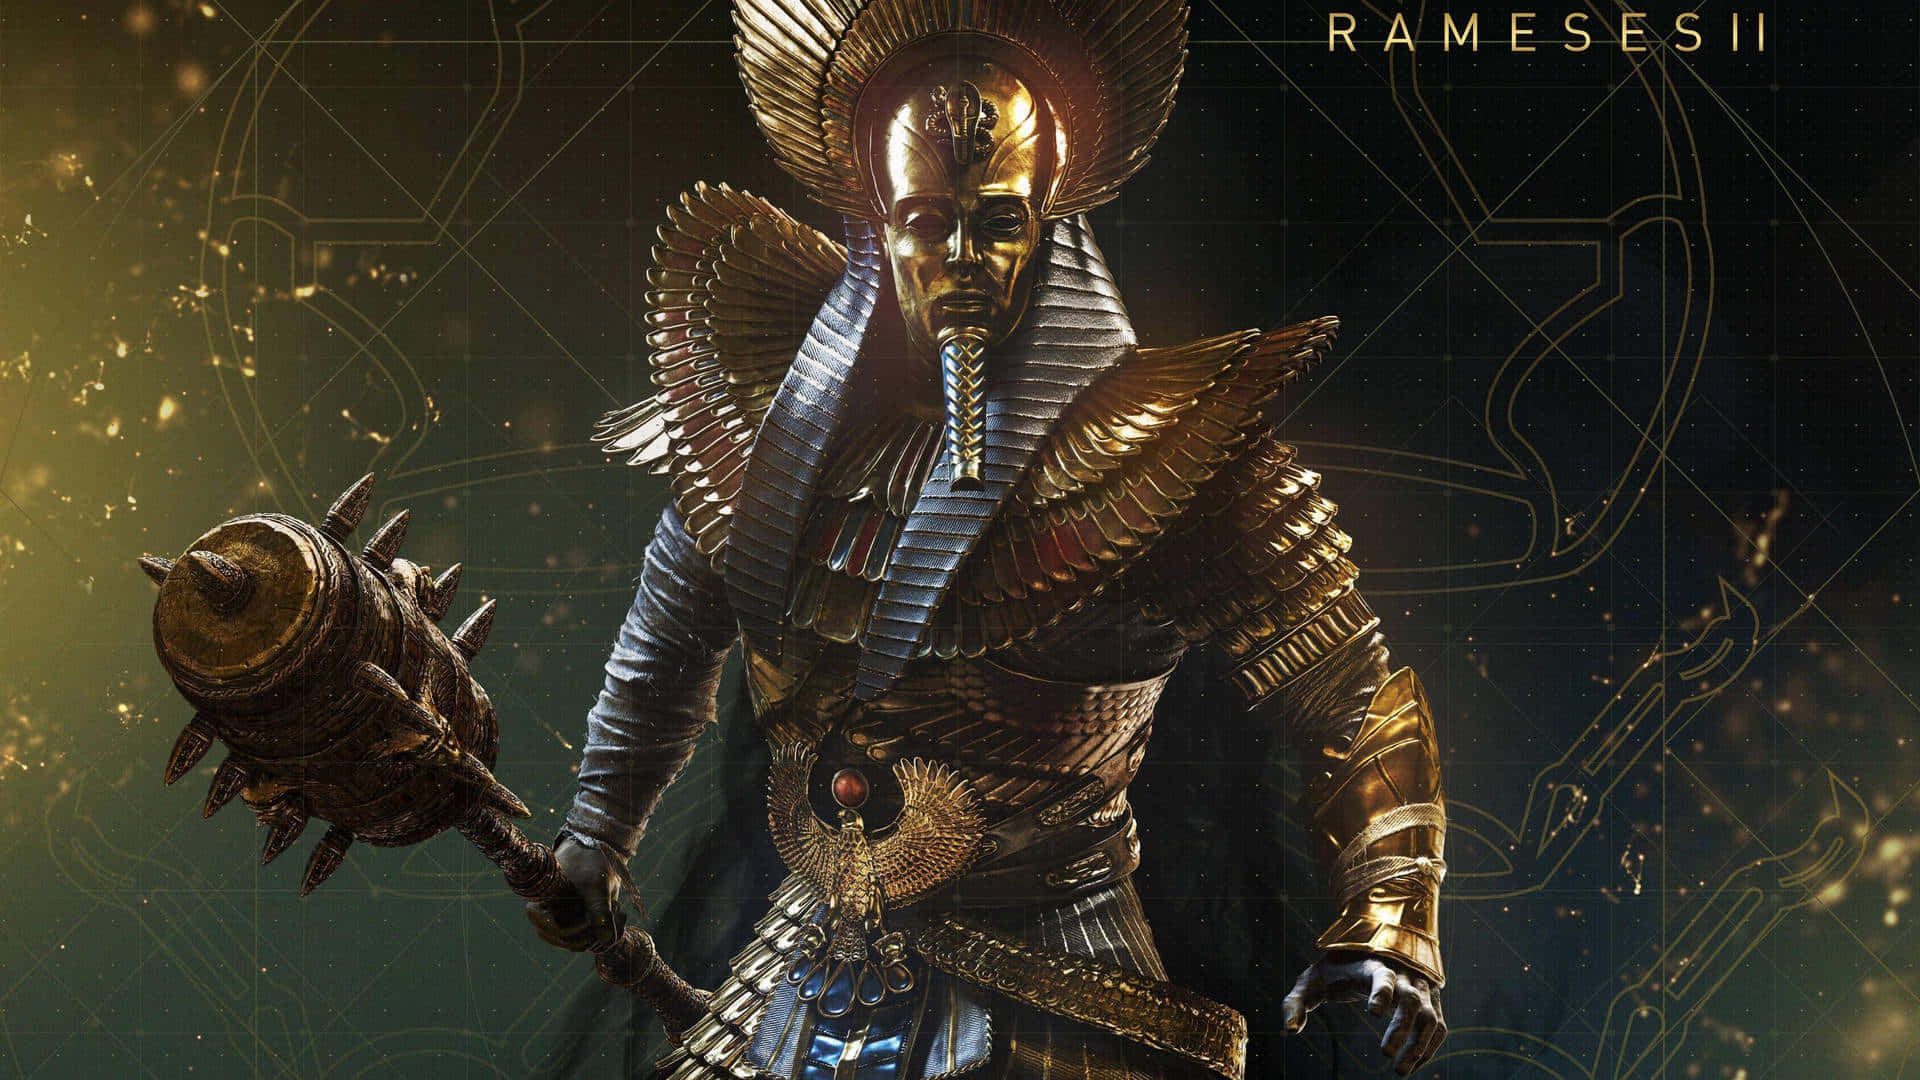 Ramesses Ii 1920x1080 Assassin's Creed Origins Background